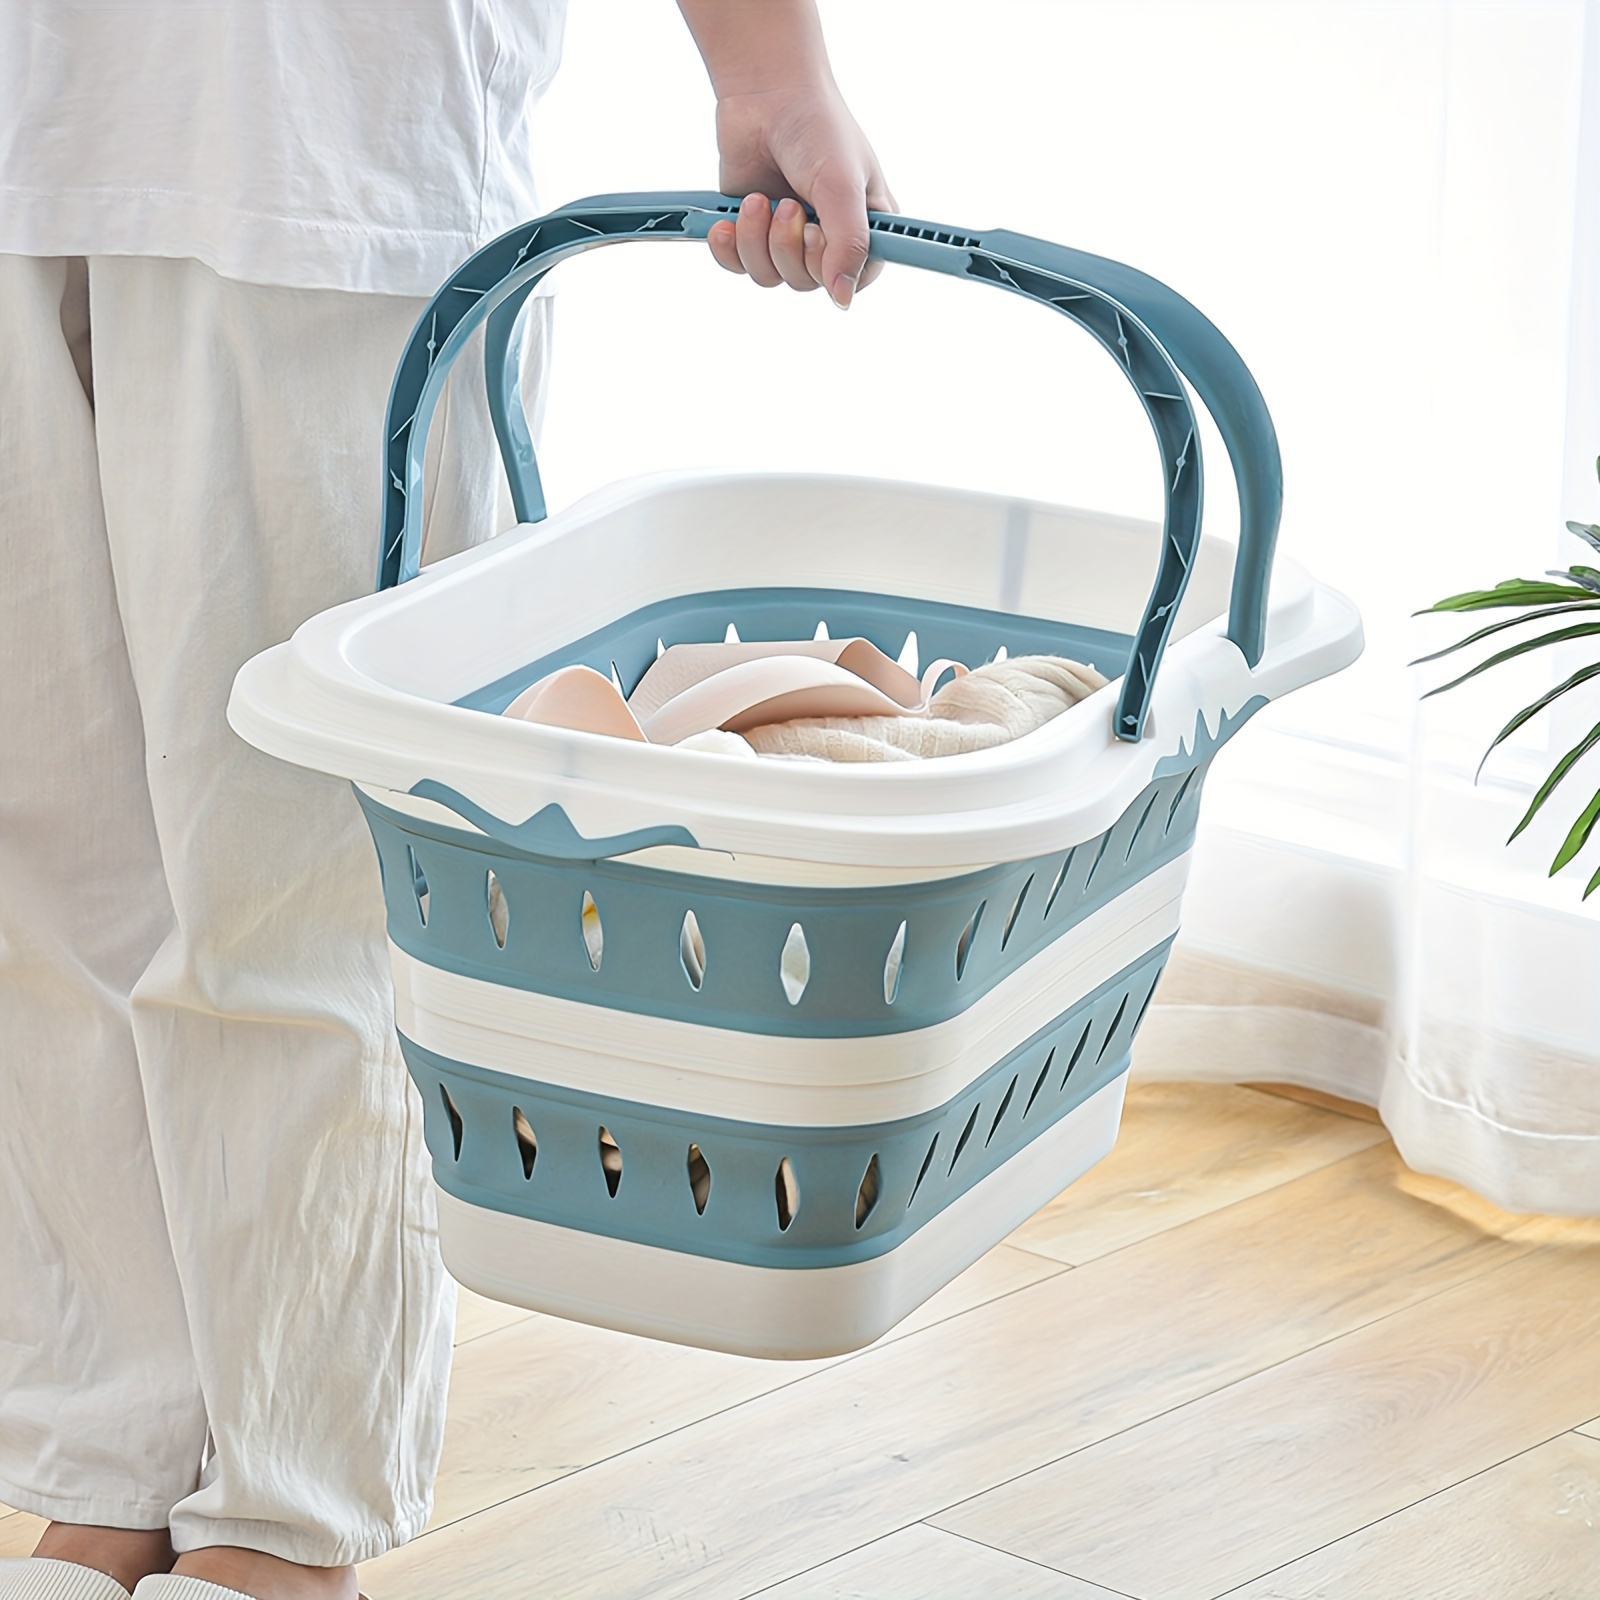 Homele Large Round Storage Basket, Cute Collapsible Laundry Basket